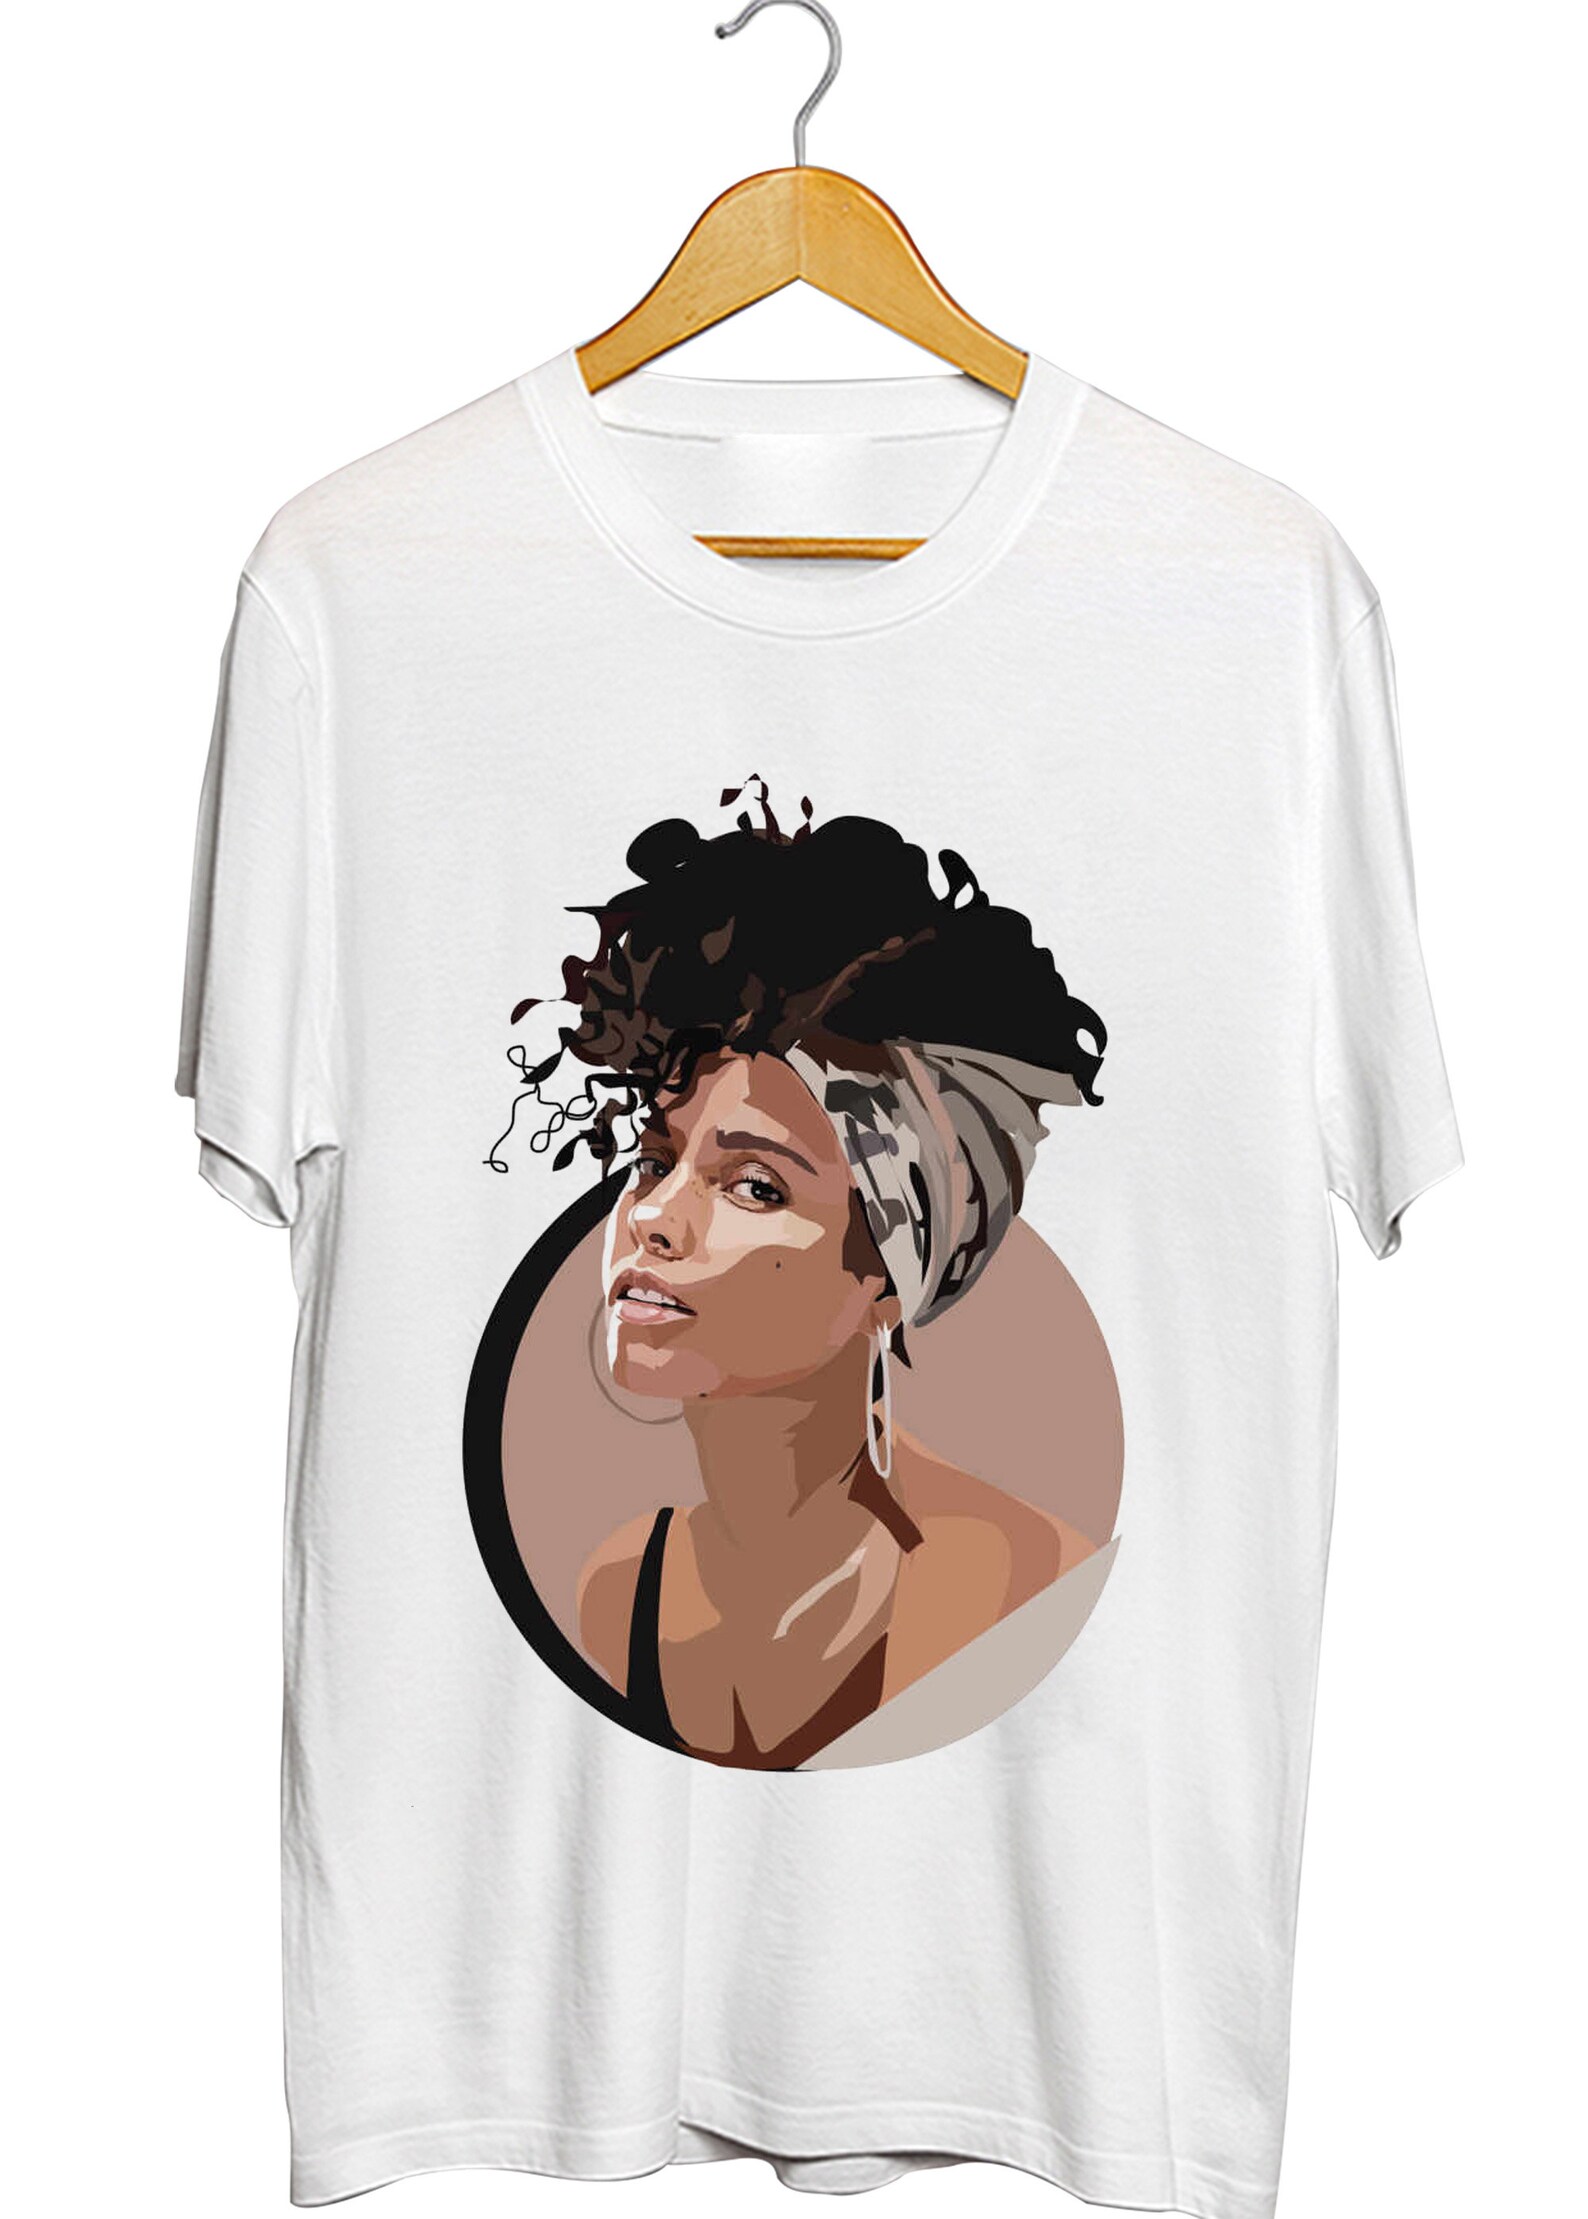 Keys Photo Graphic Vintage T Shirt Alicia Keys Musician | Etsy